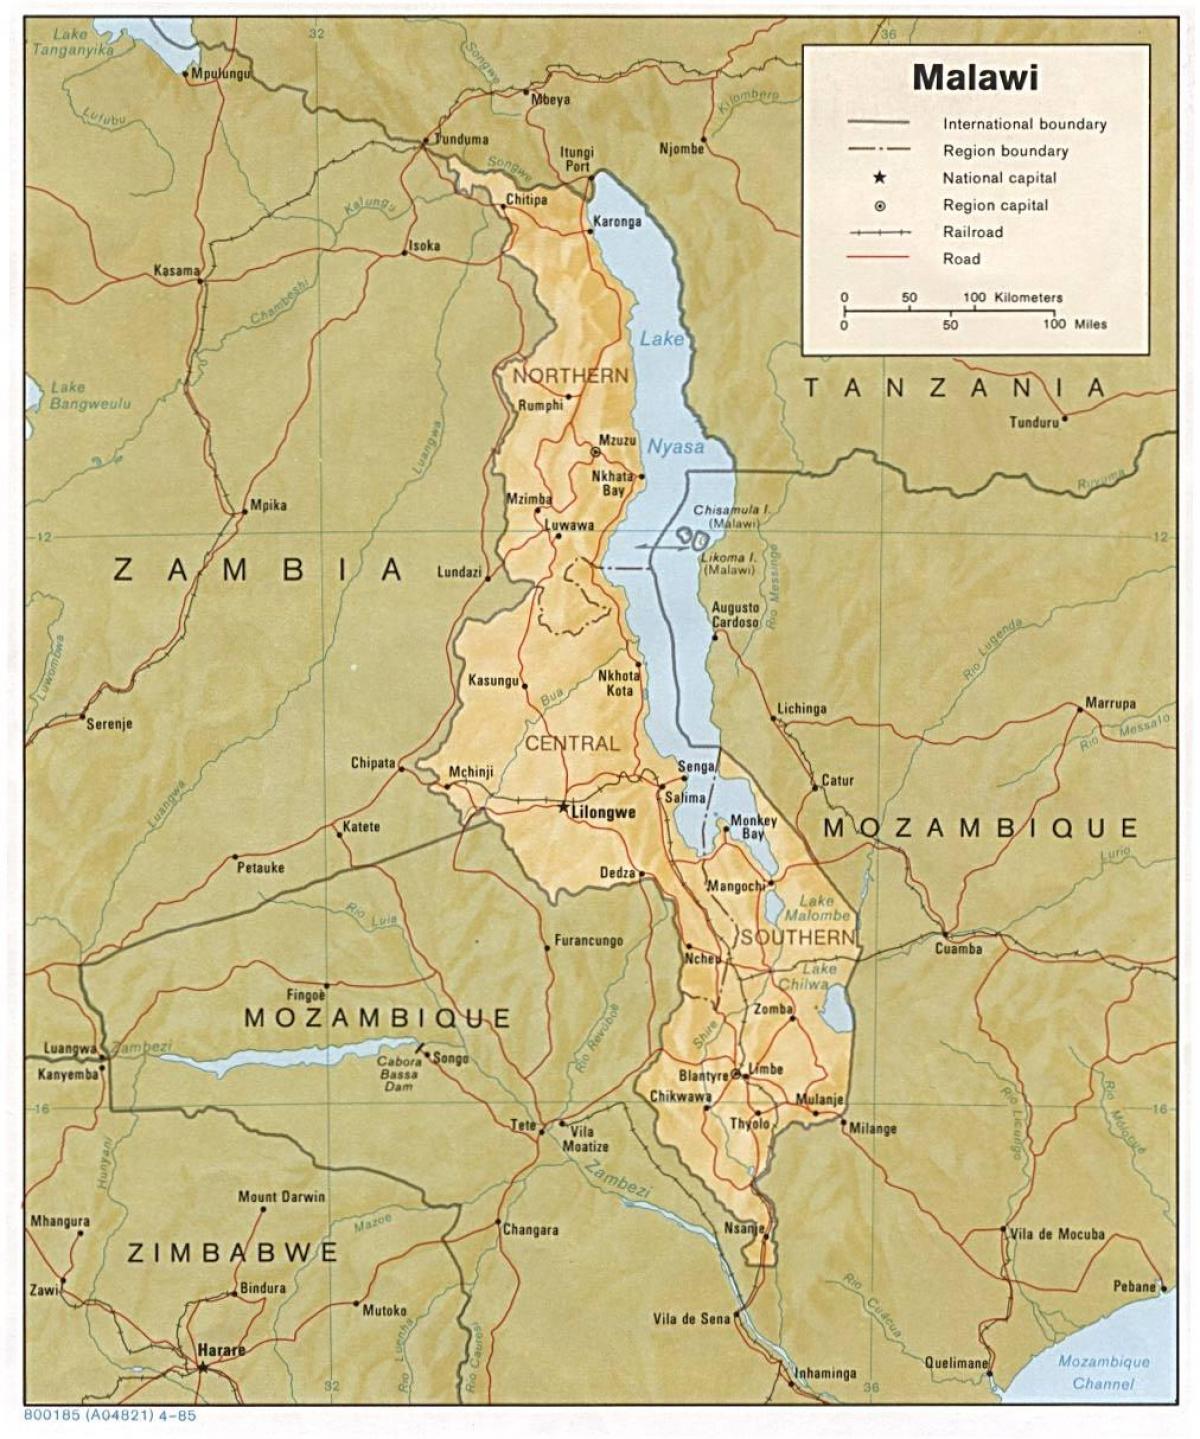 lago Malawi no mapa